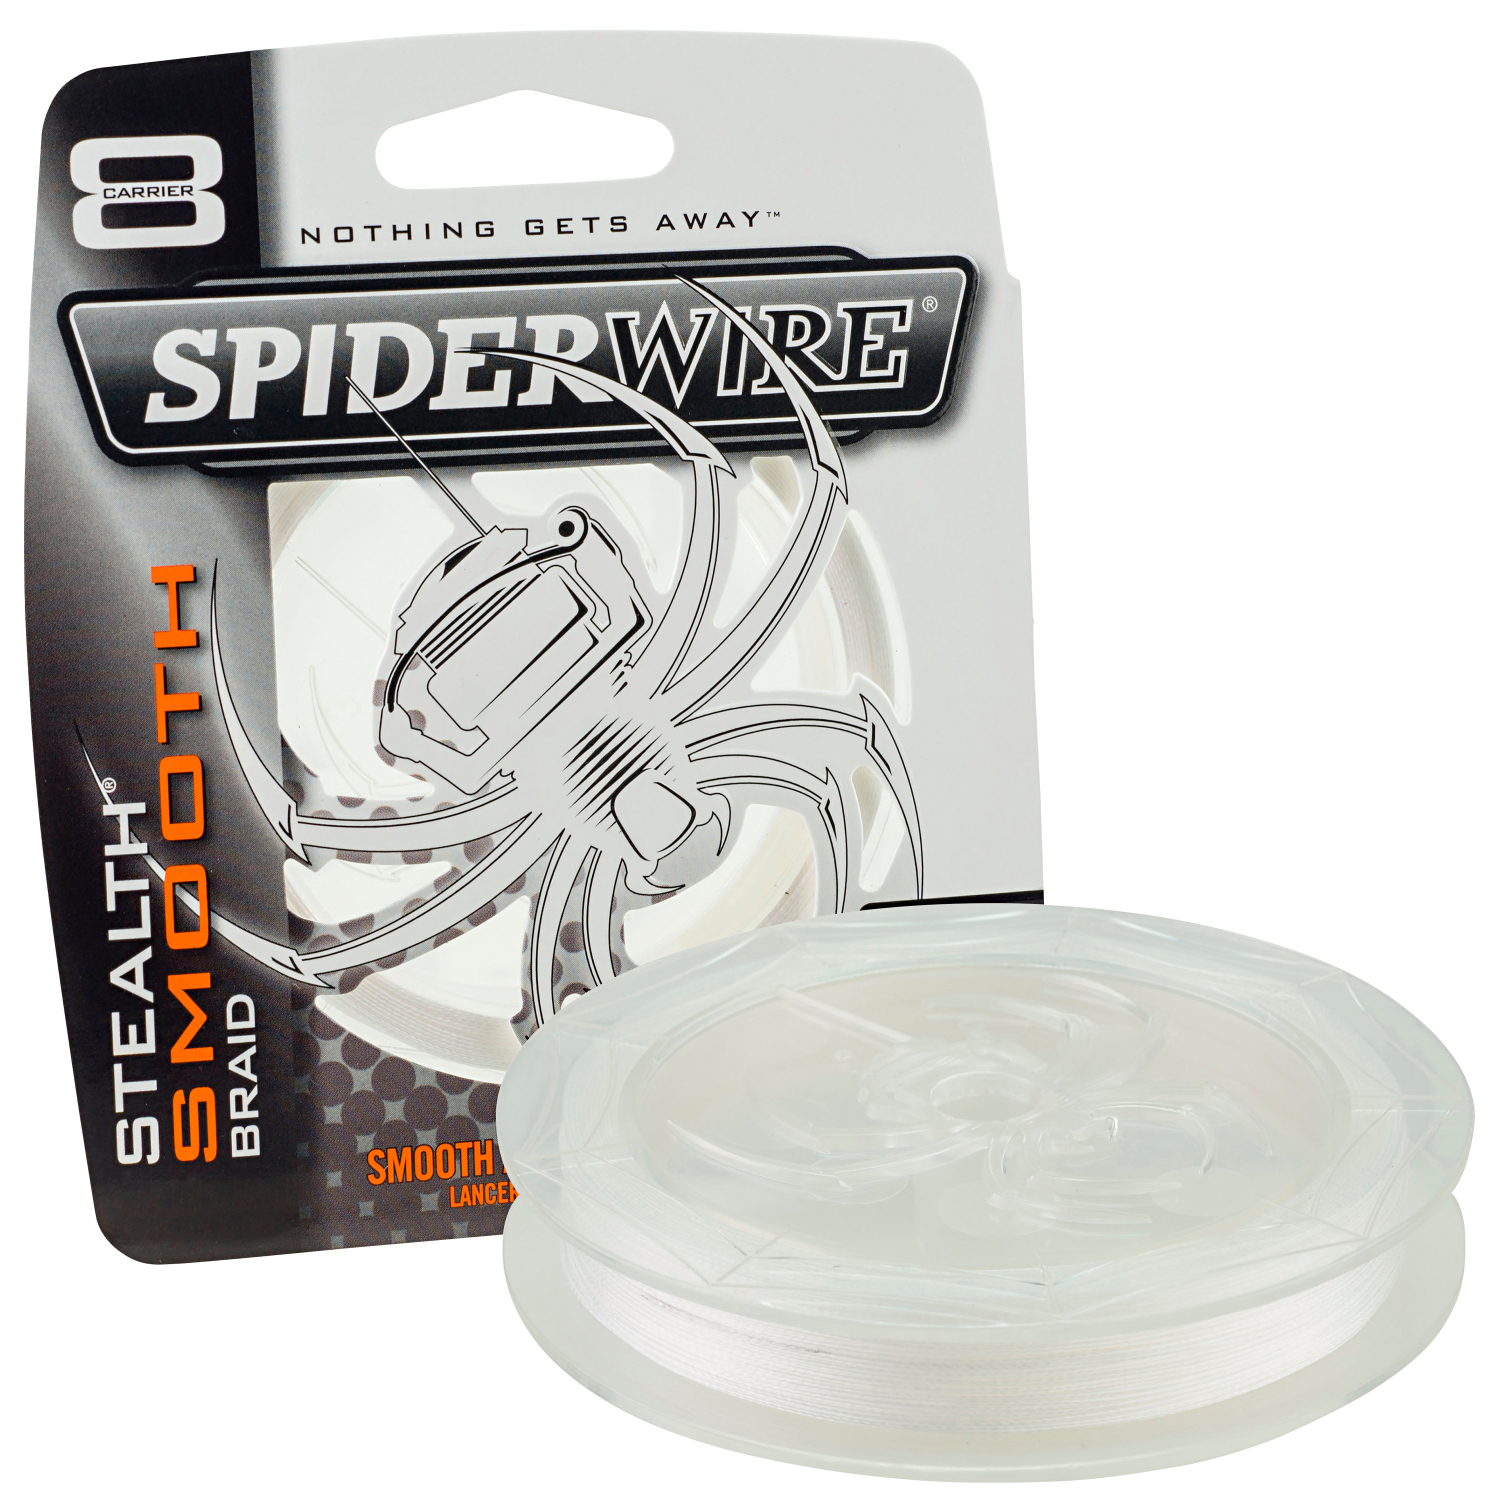 Spiderwire Spiderwire Stealth Smooth 8 Translucent fishing line 240/300 